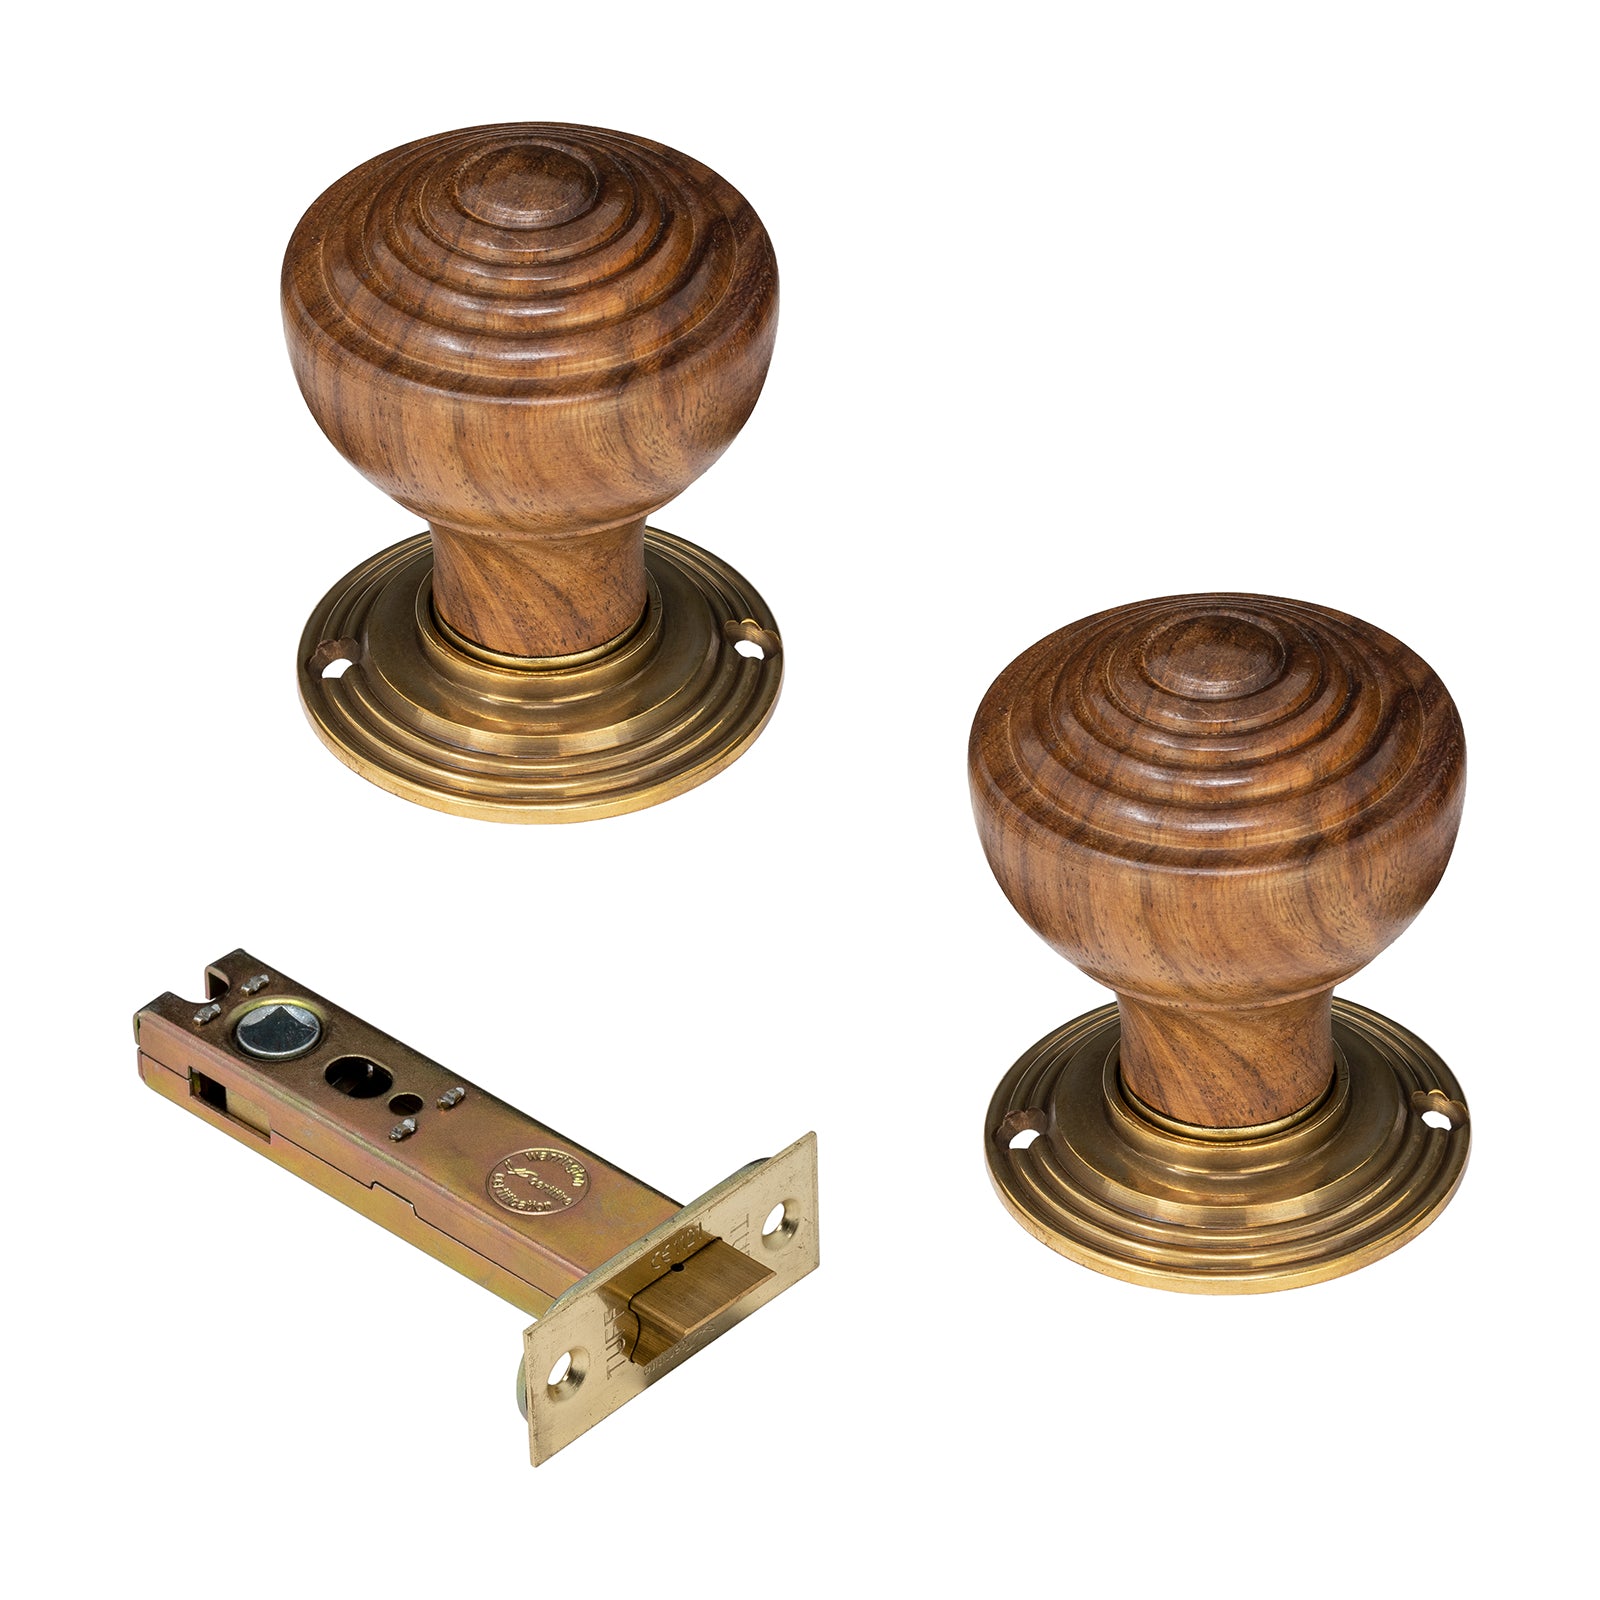 Ringed Door knobs rosewood 4 inch latch set